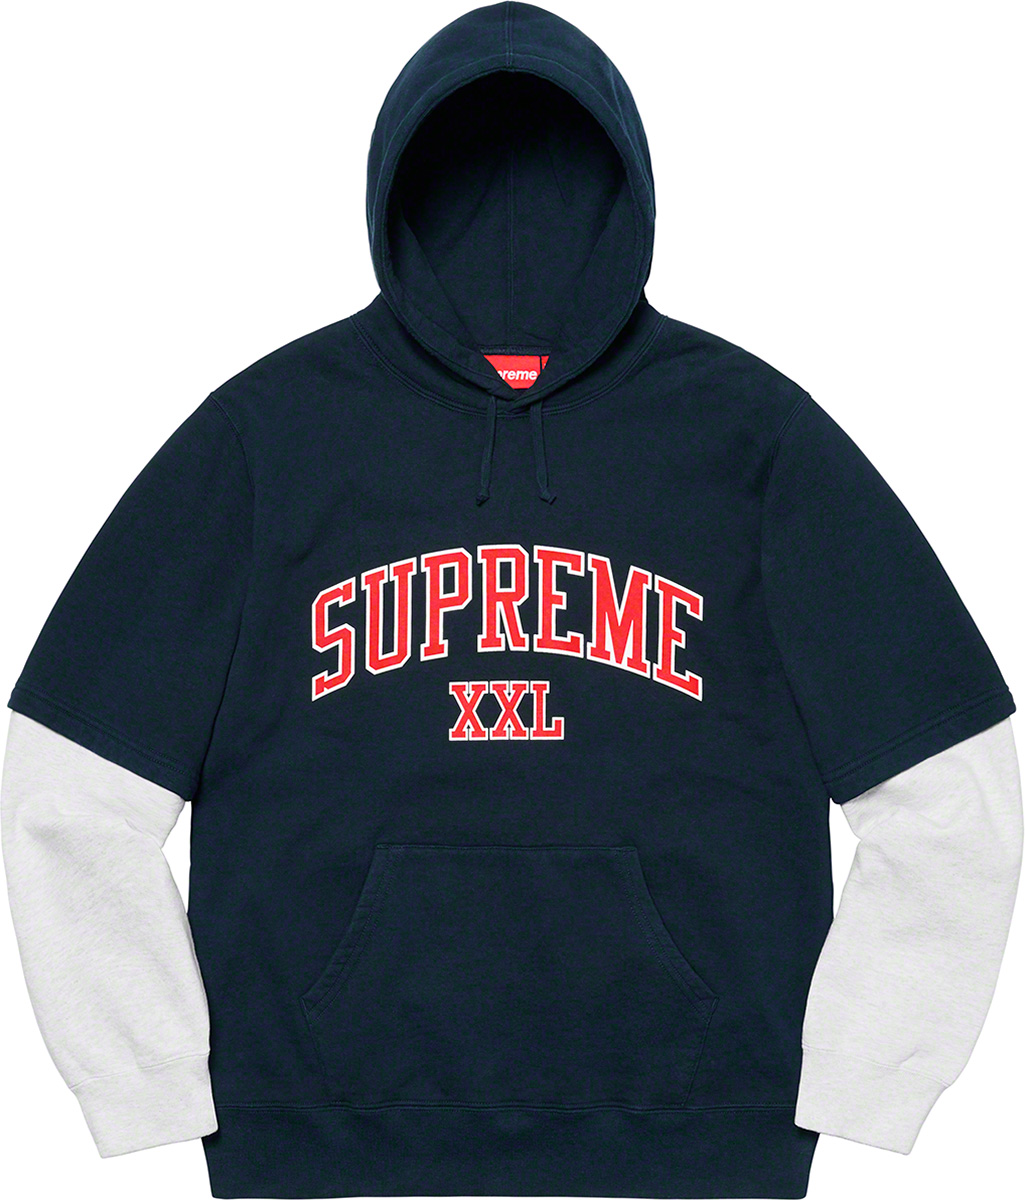 XXL Hooded Sweatshirt - Supreme Community